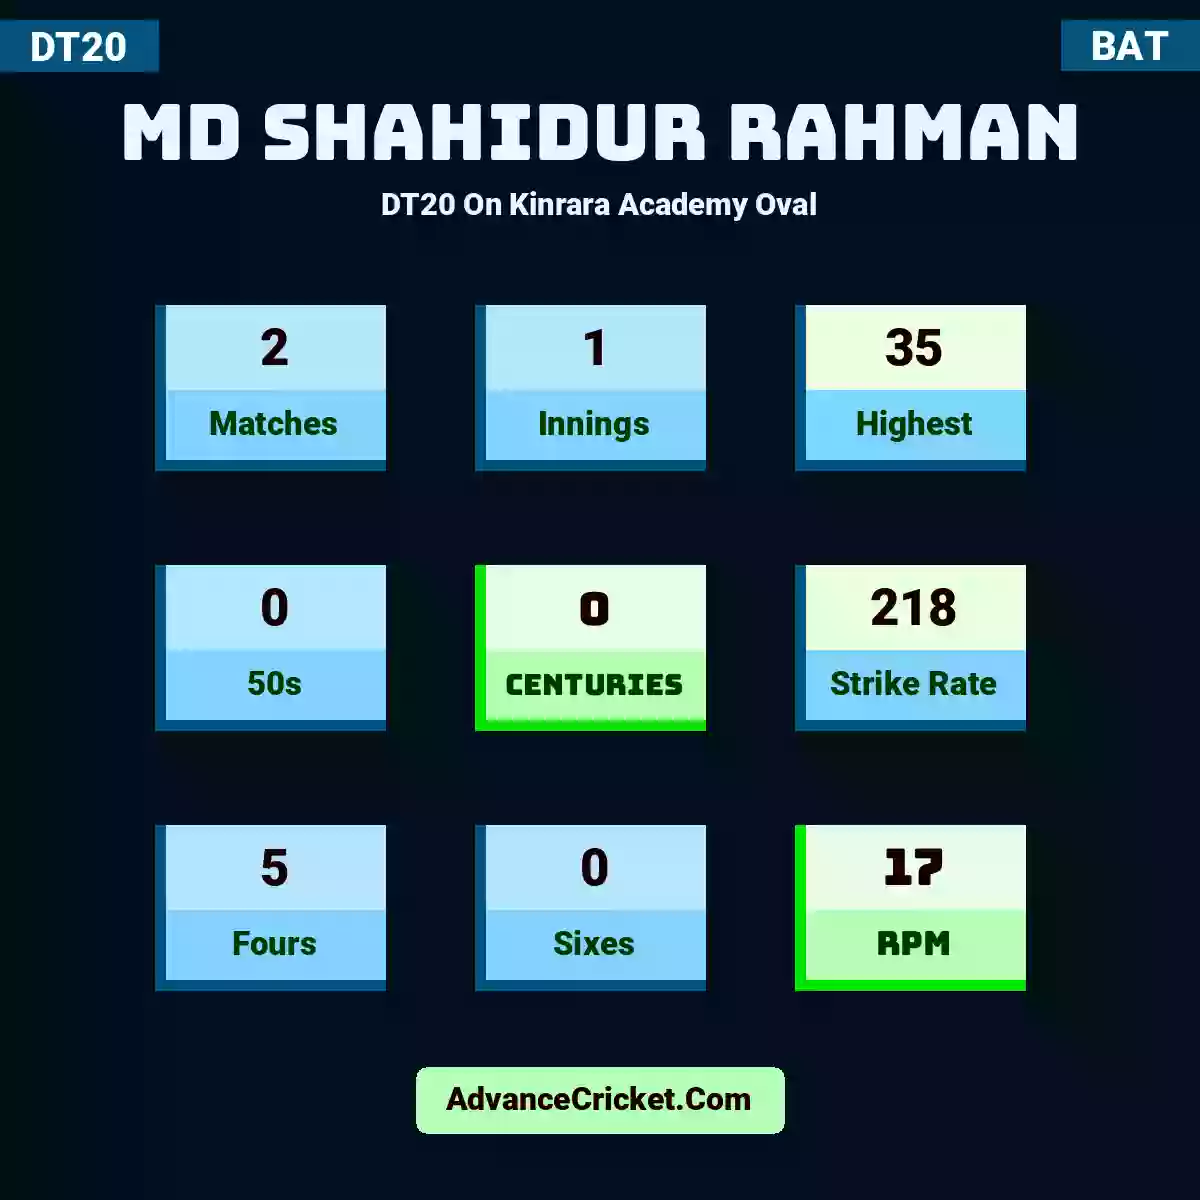 Md Shahidur Rahman DT20  On Kinrara Academy Oval, Md Shahidur Rahman played 2 matches, scored 35 runs as highest, 0 half-centuries, and 0 centuries, with a strike rate of 218. m.shahidur.rahman hit 5 fours and 0 sixes, with an RPM of 17.